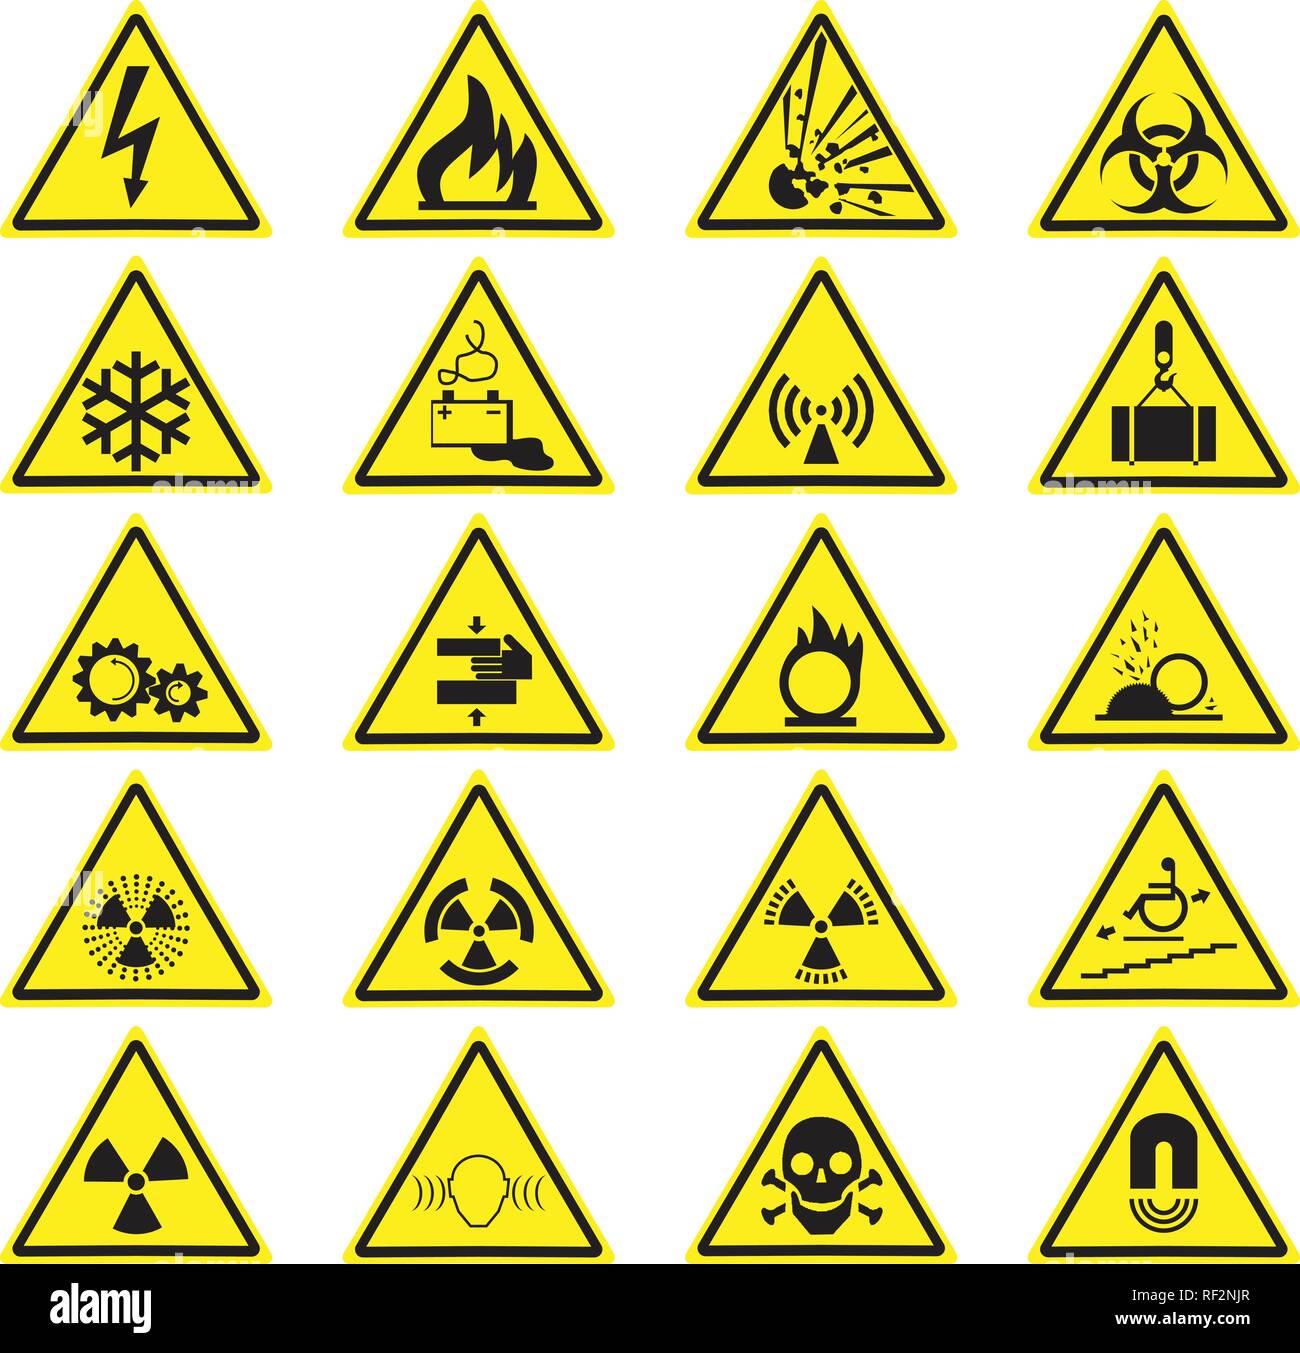 Warning Hazard Yellow Triangle Signs Set Vector Symbols Isolated On